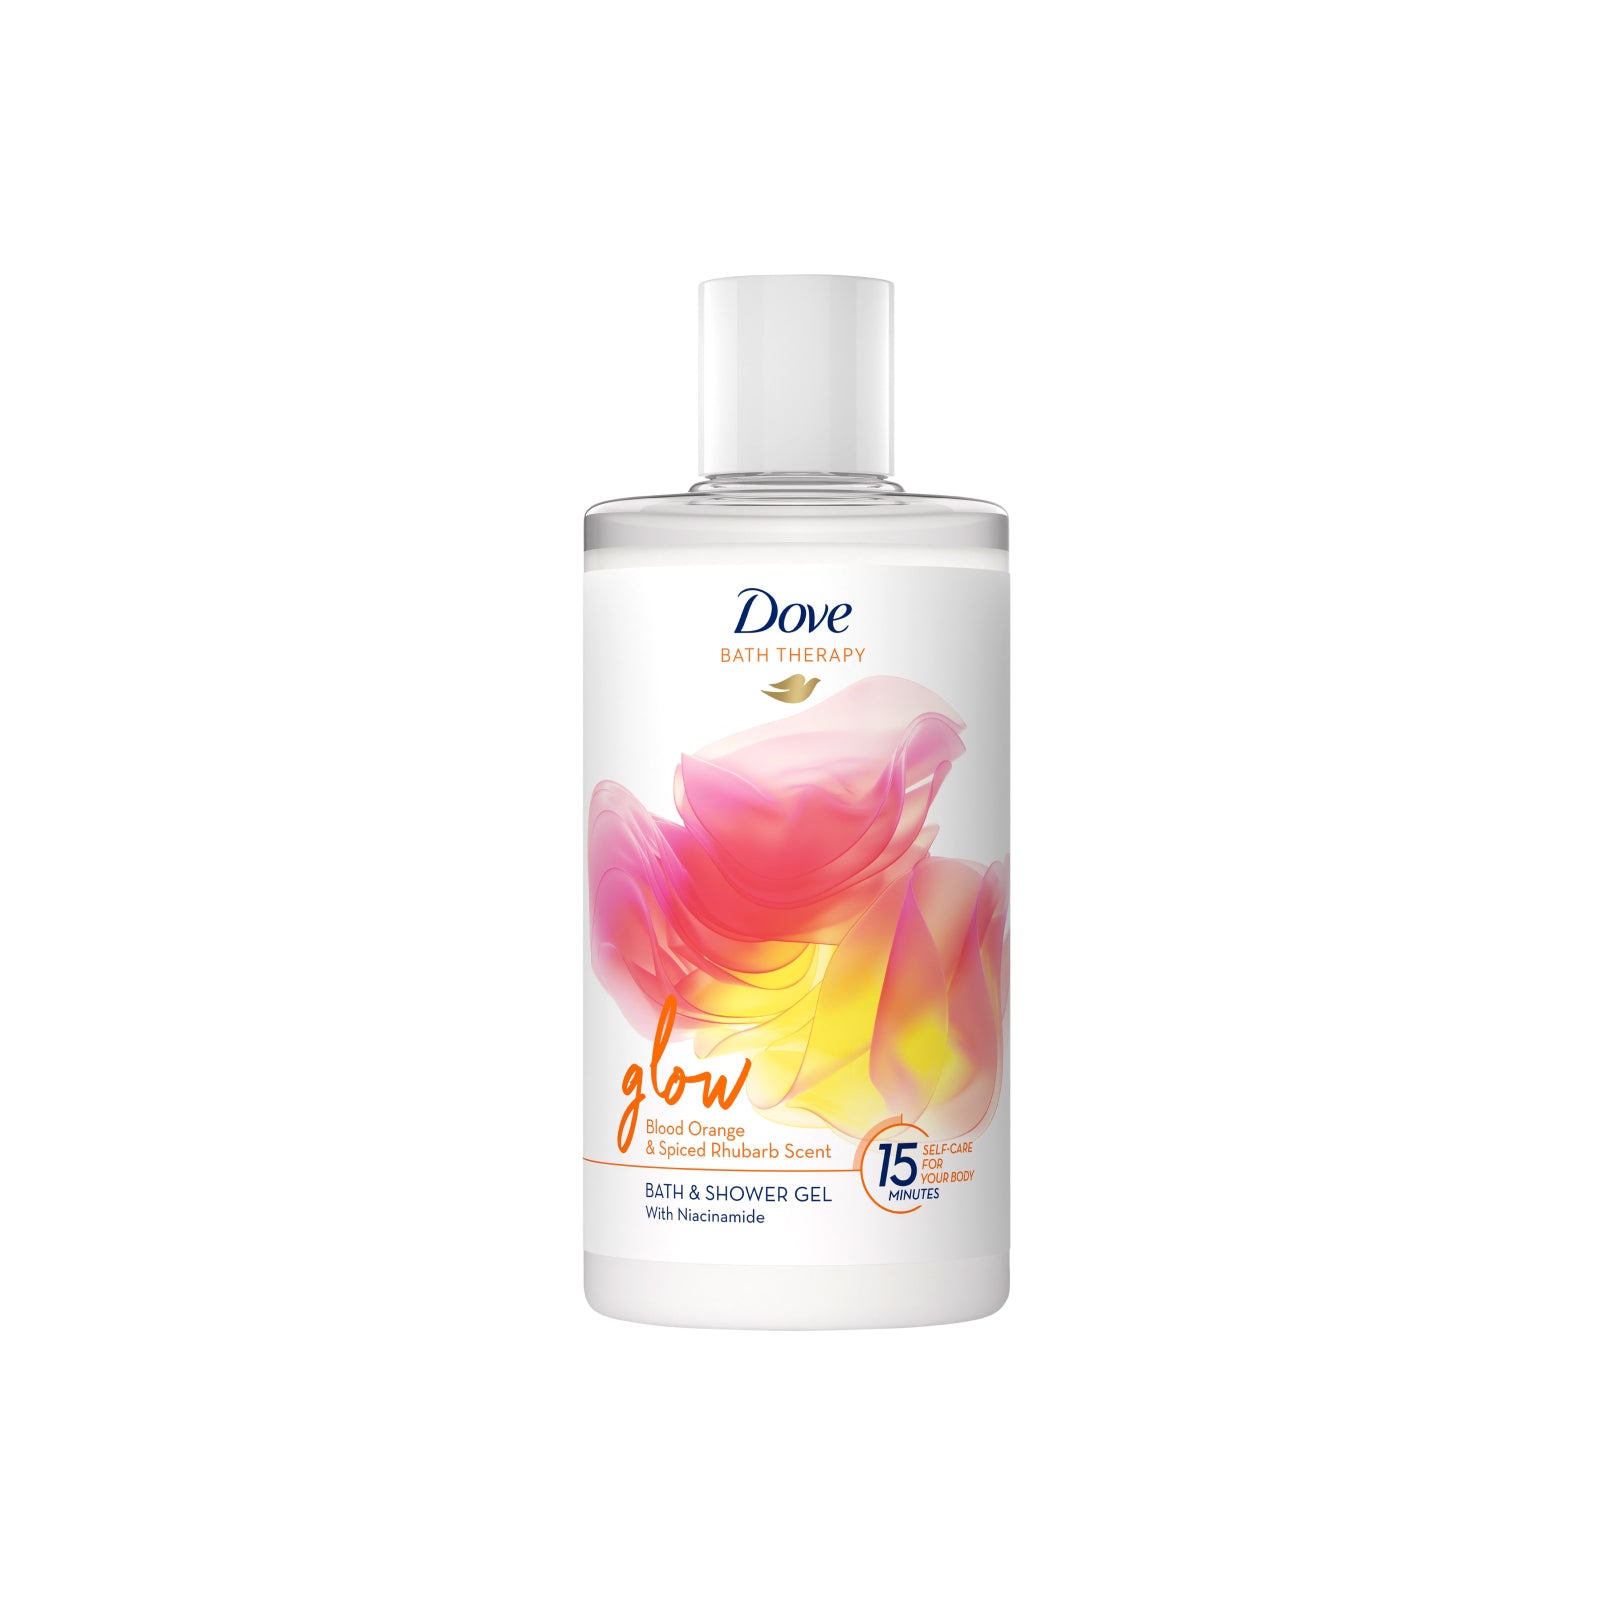 Dove Bath Therapy Bad & Duschgel Glow 400 ml